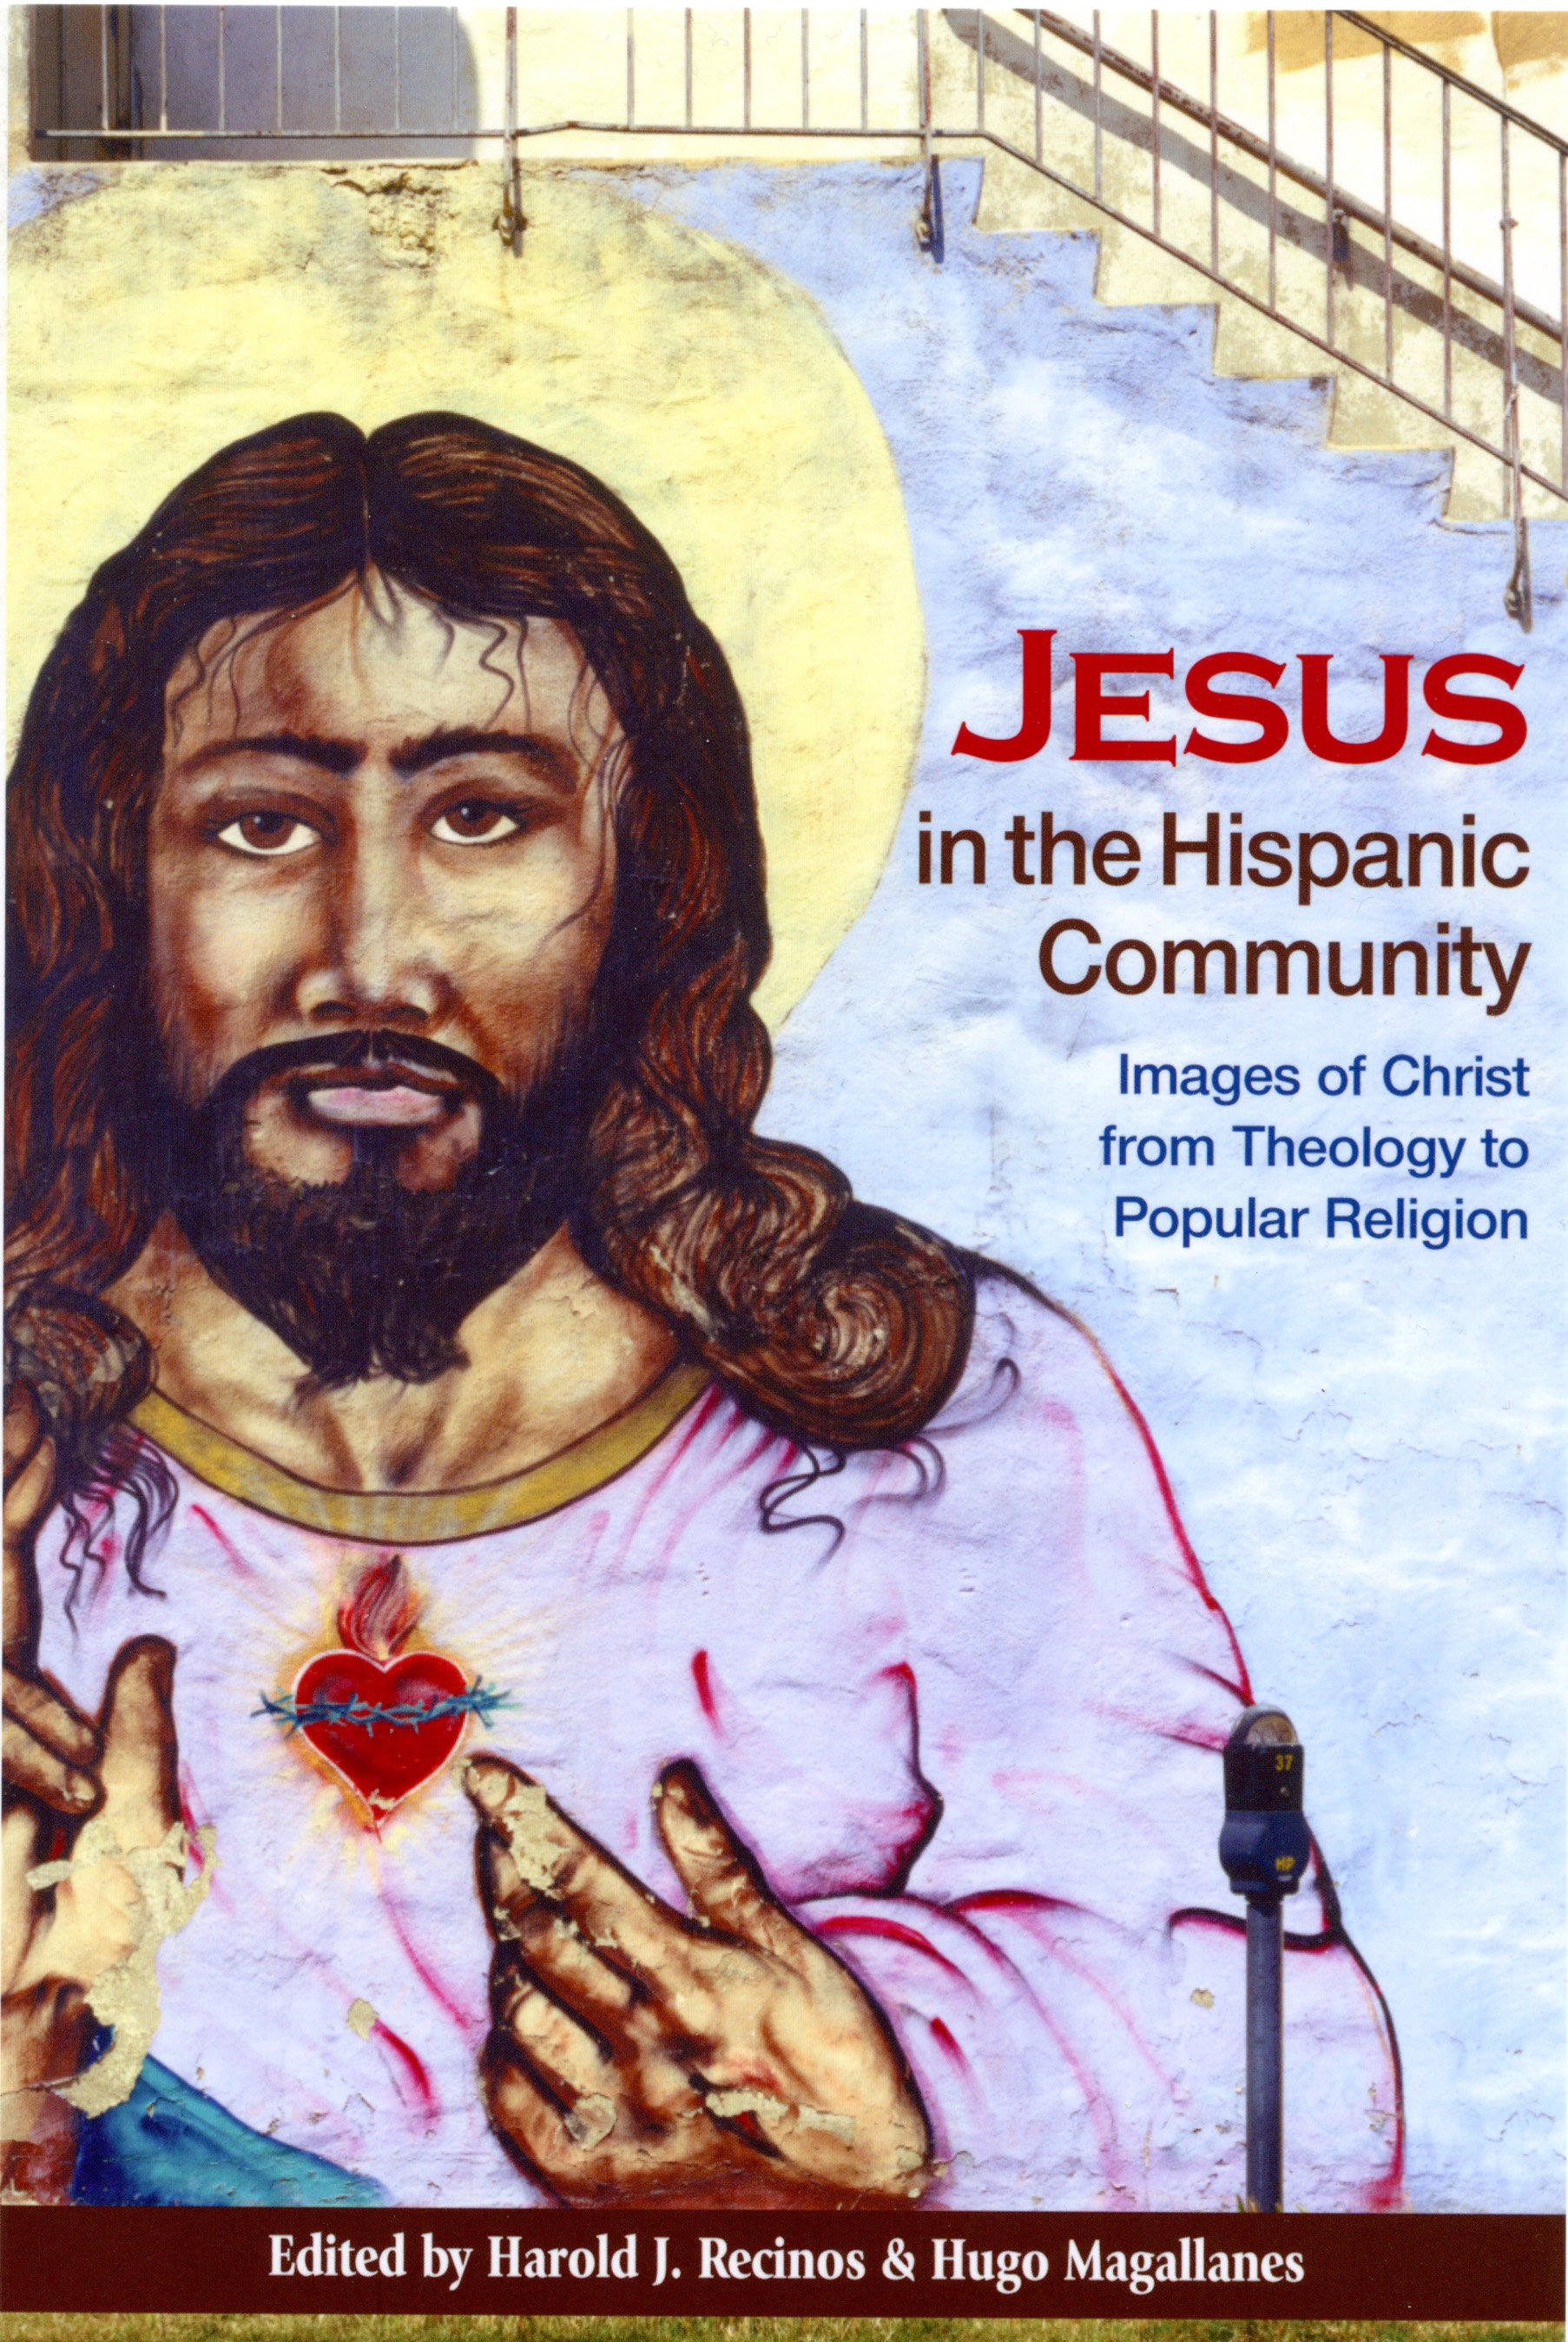 'Jesus in the Hispanic Community' book cover